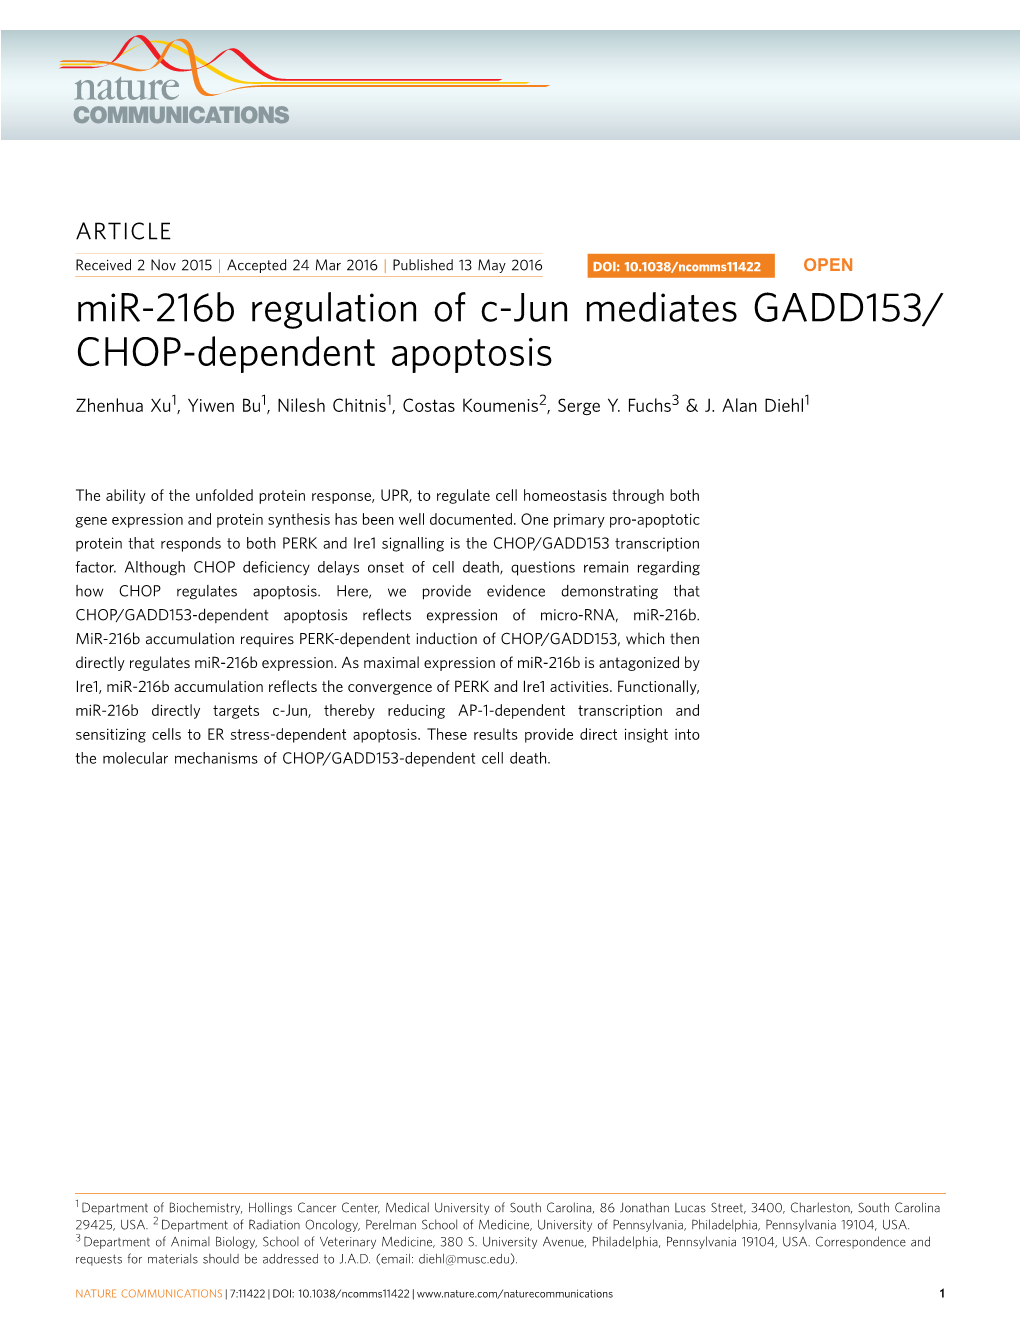 Mir-216B Regulation of C-Jun Mediates GADD153/CHOP